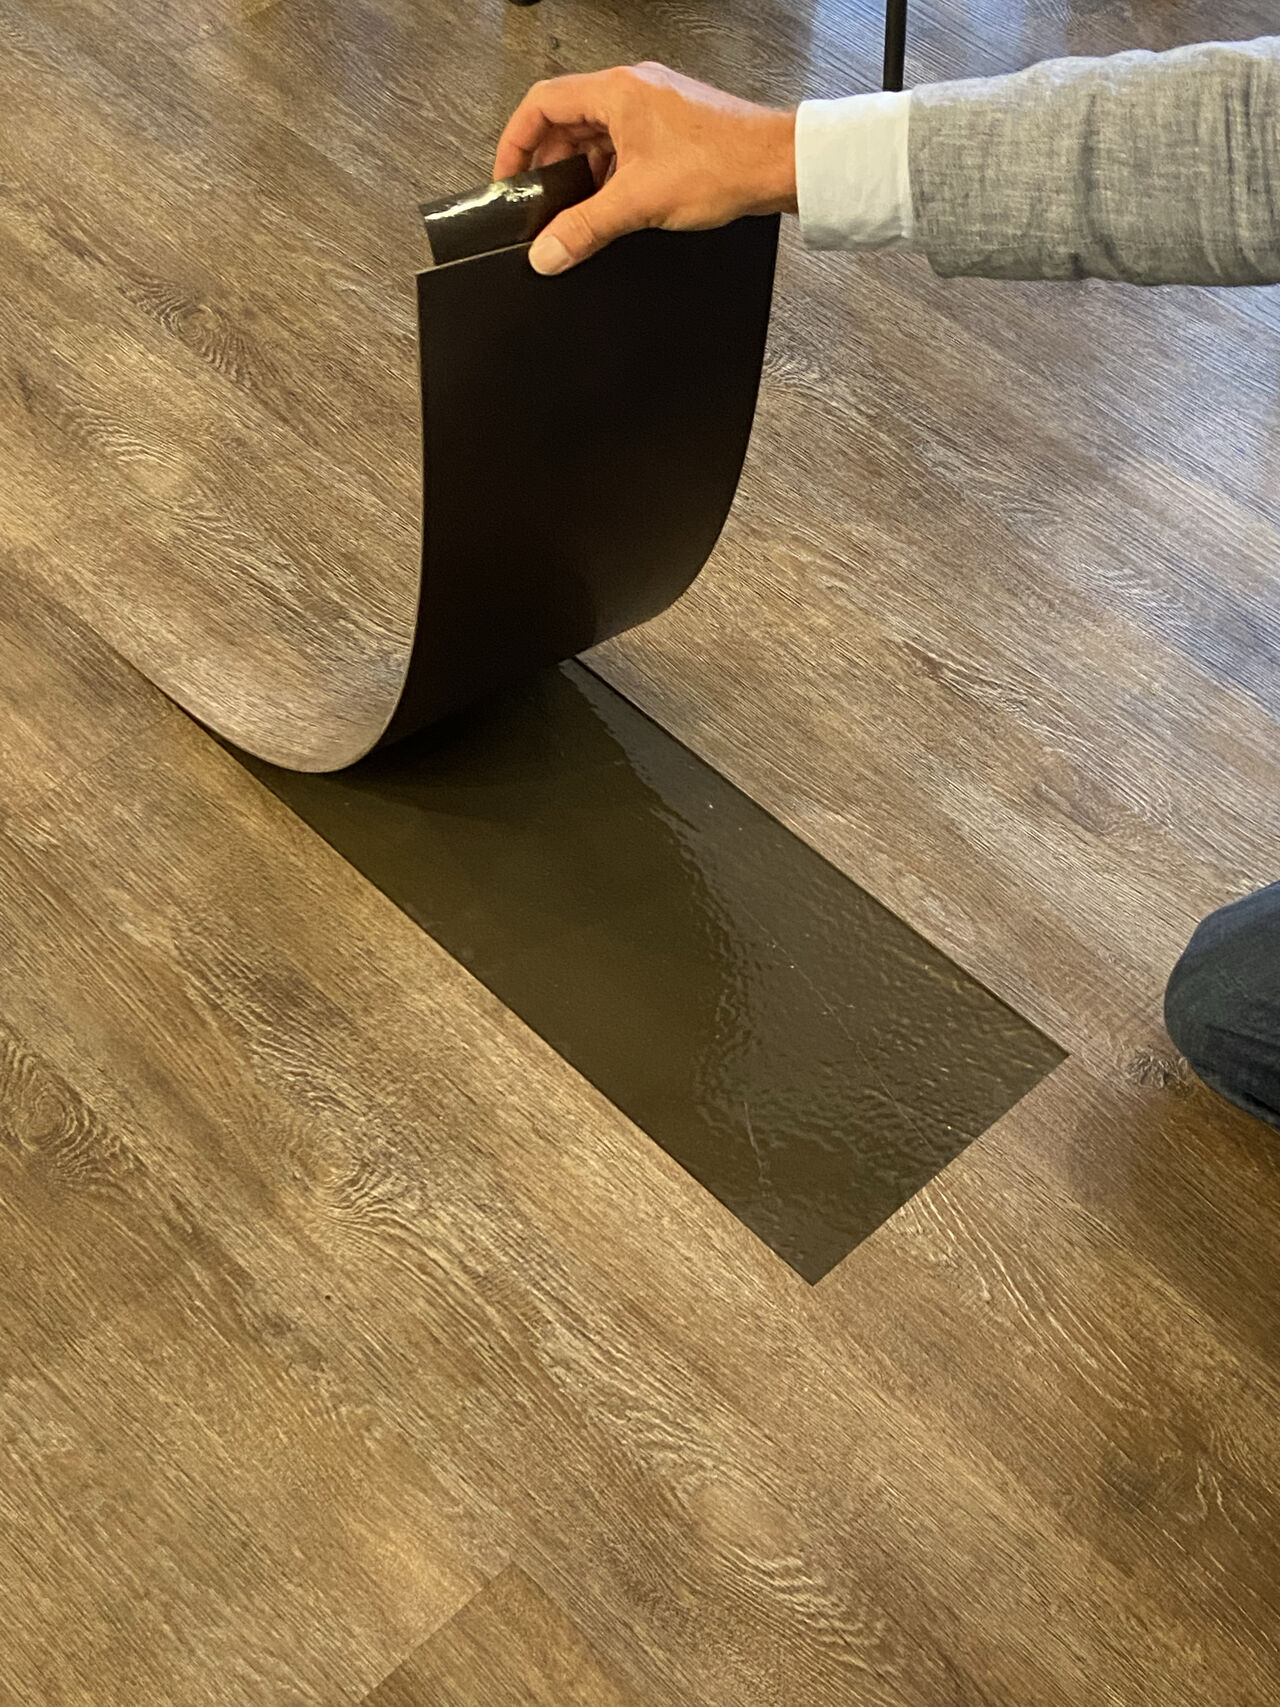 IOBAC adhesive-free flooring installation - easy uplift